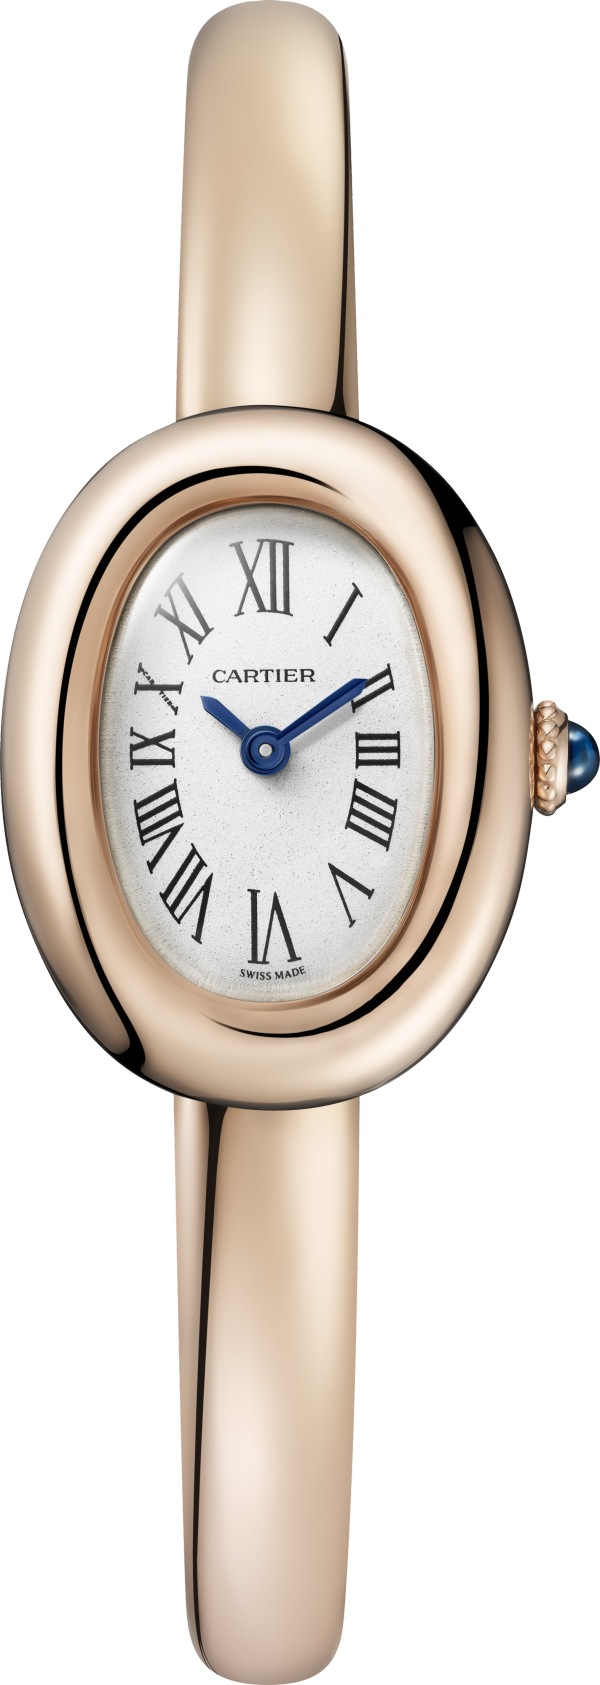 Baignoire watch (Size 16) Mini model, quartz movement, rose gold